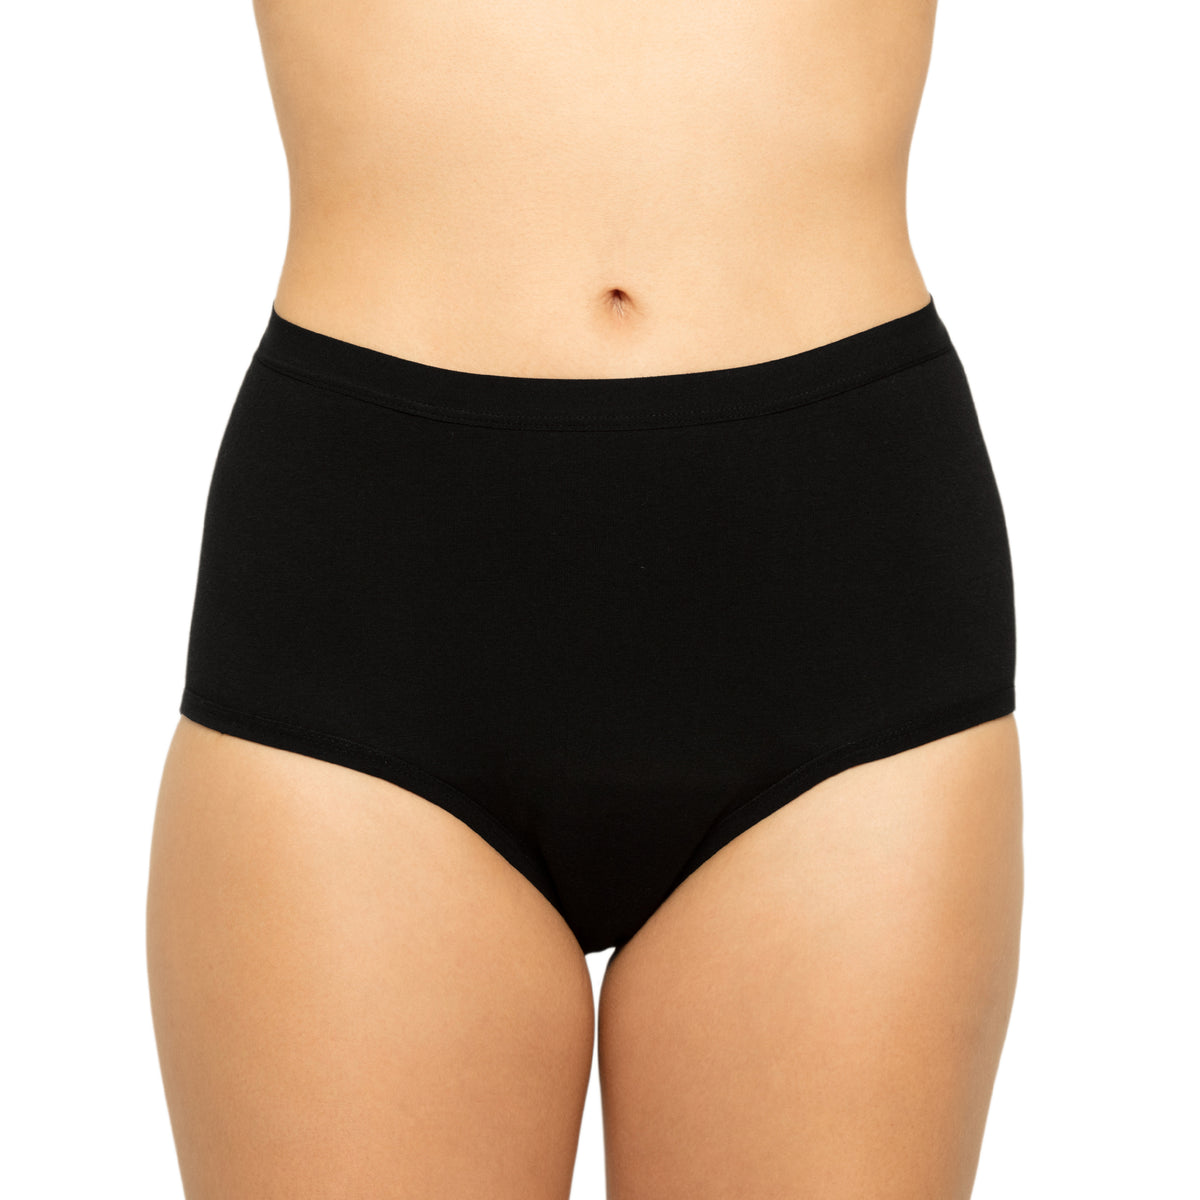 GAMIRA High Waisted Period Underwear for Women, Period Leak Proof